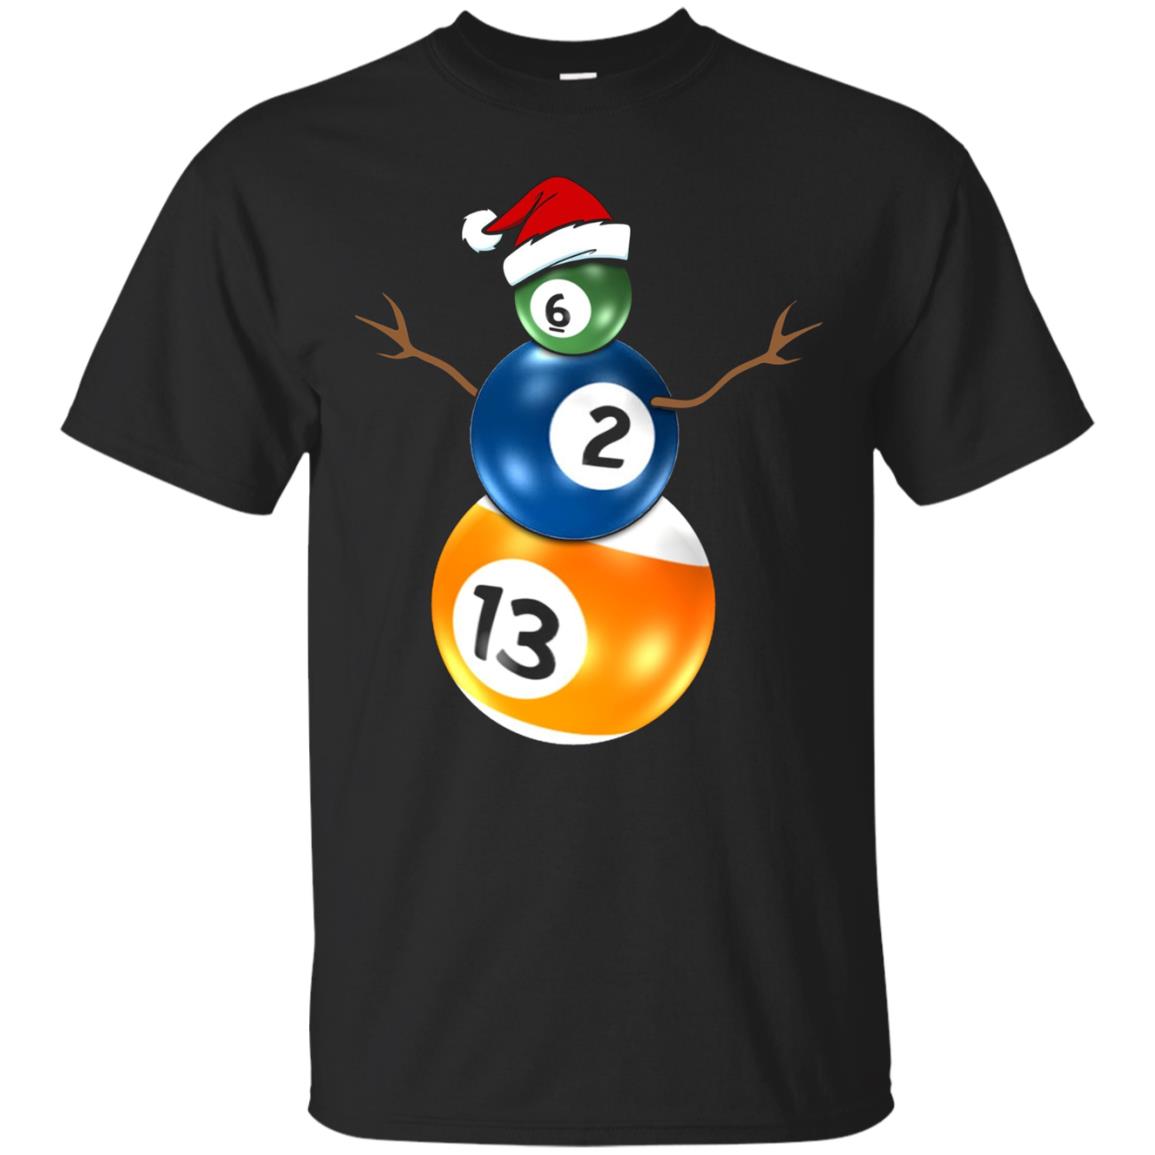 Billiards Christmas Snowman T-shirt With Pool Table Balls